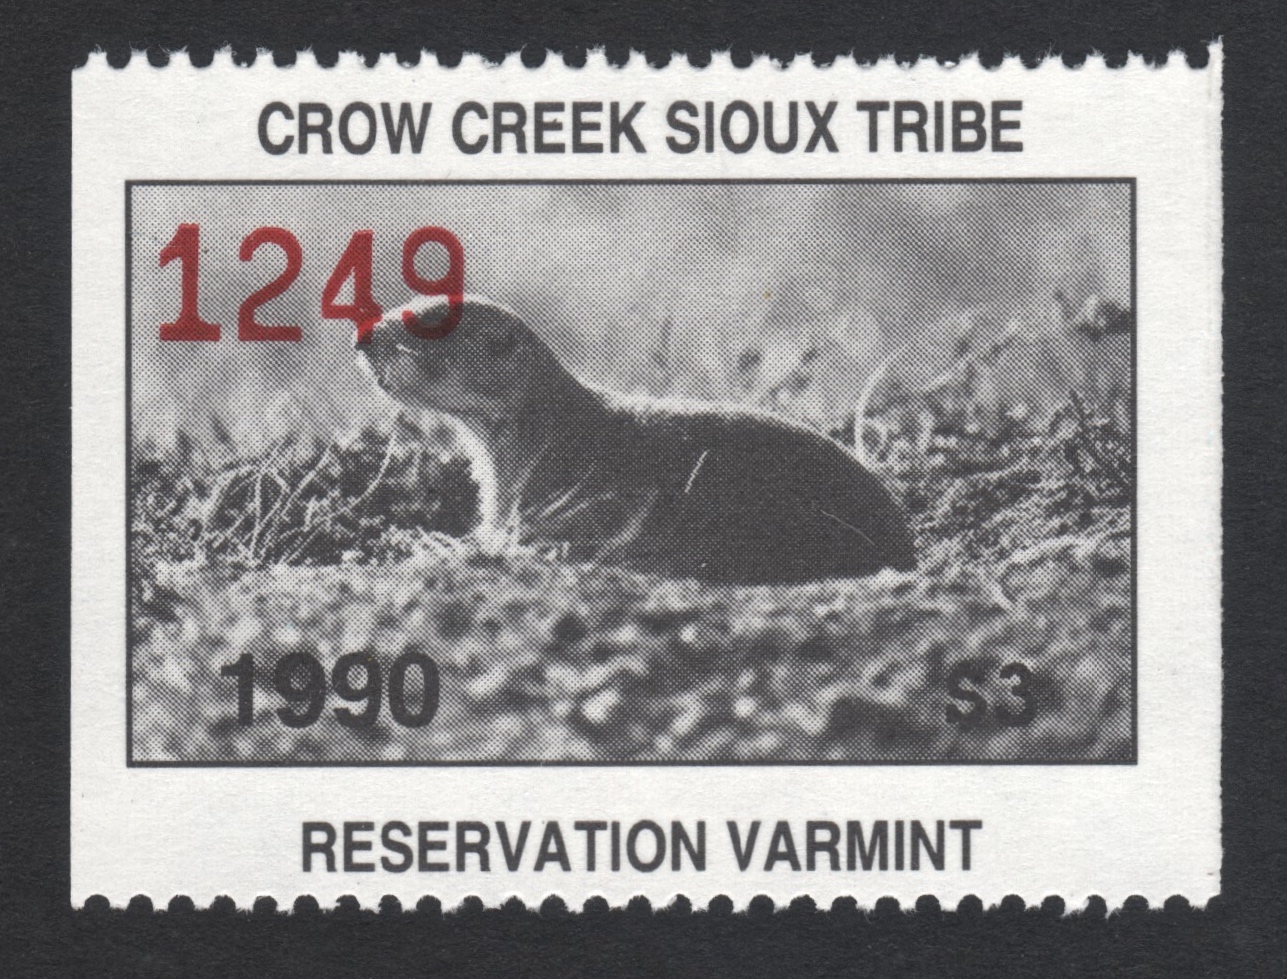 1990 Crow Creek Reservation Varmint